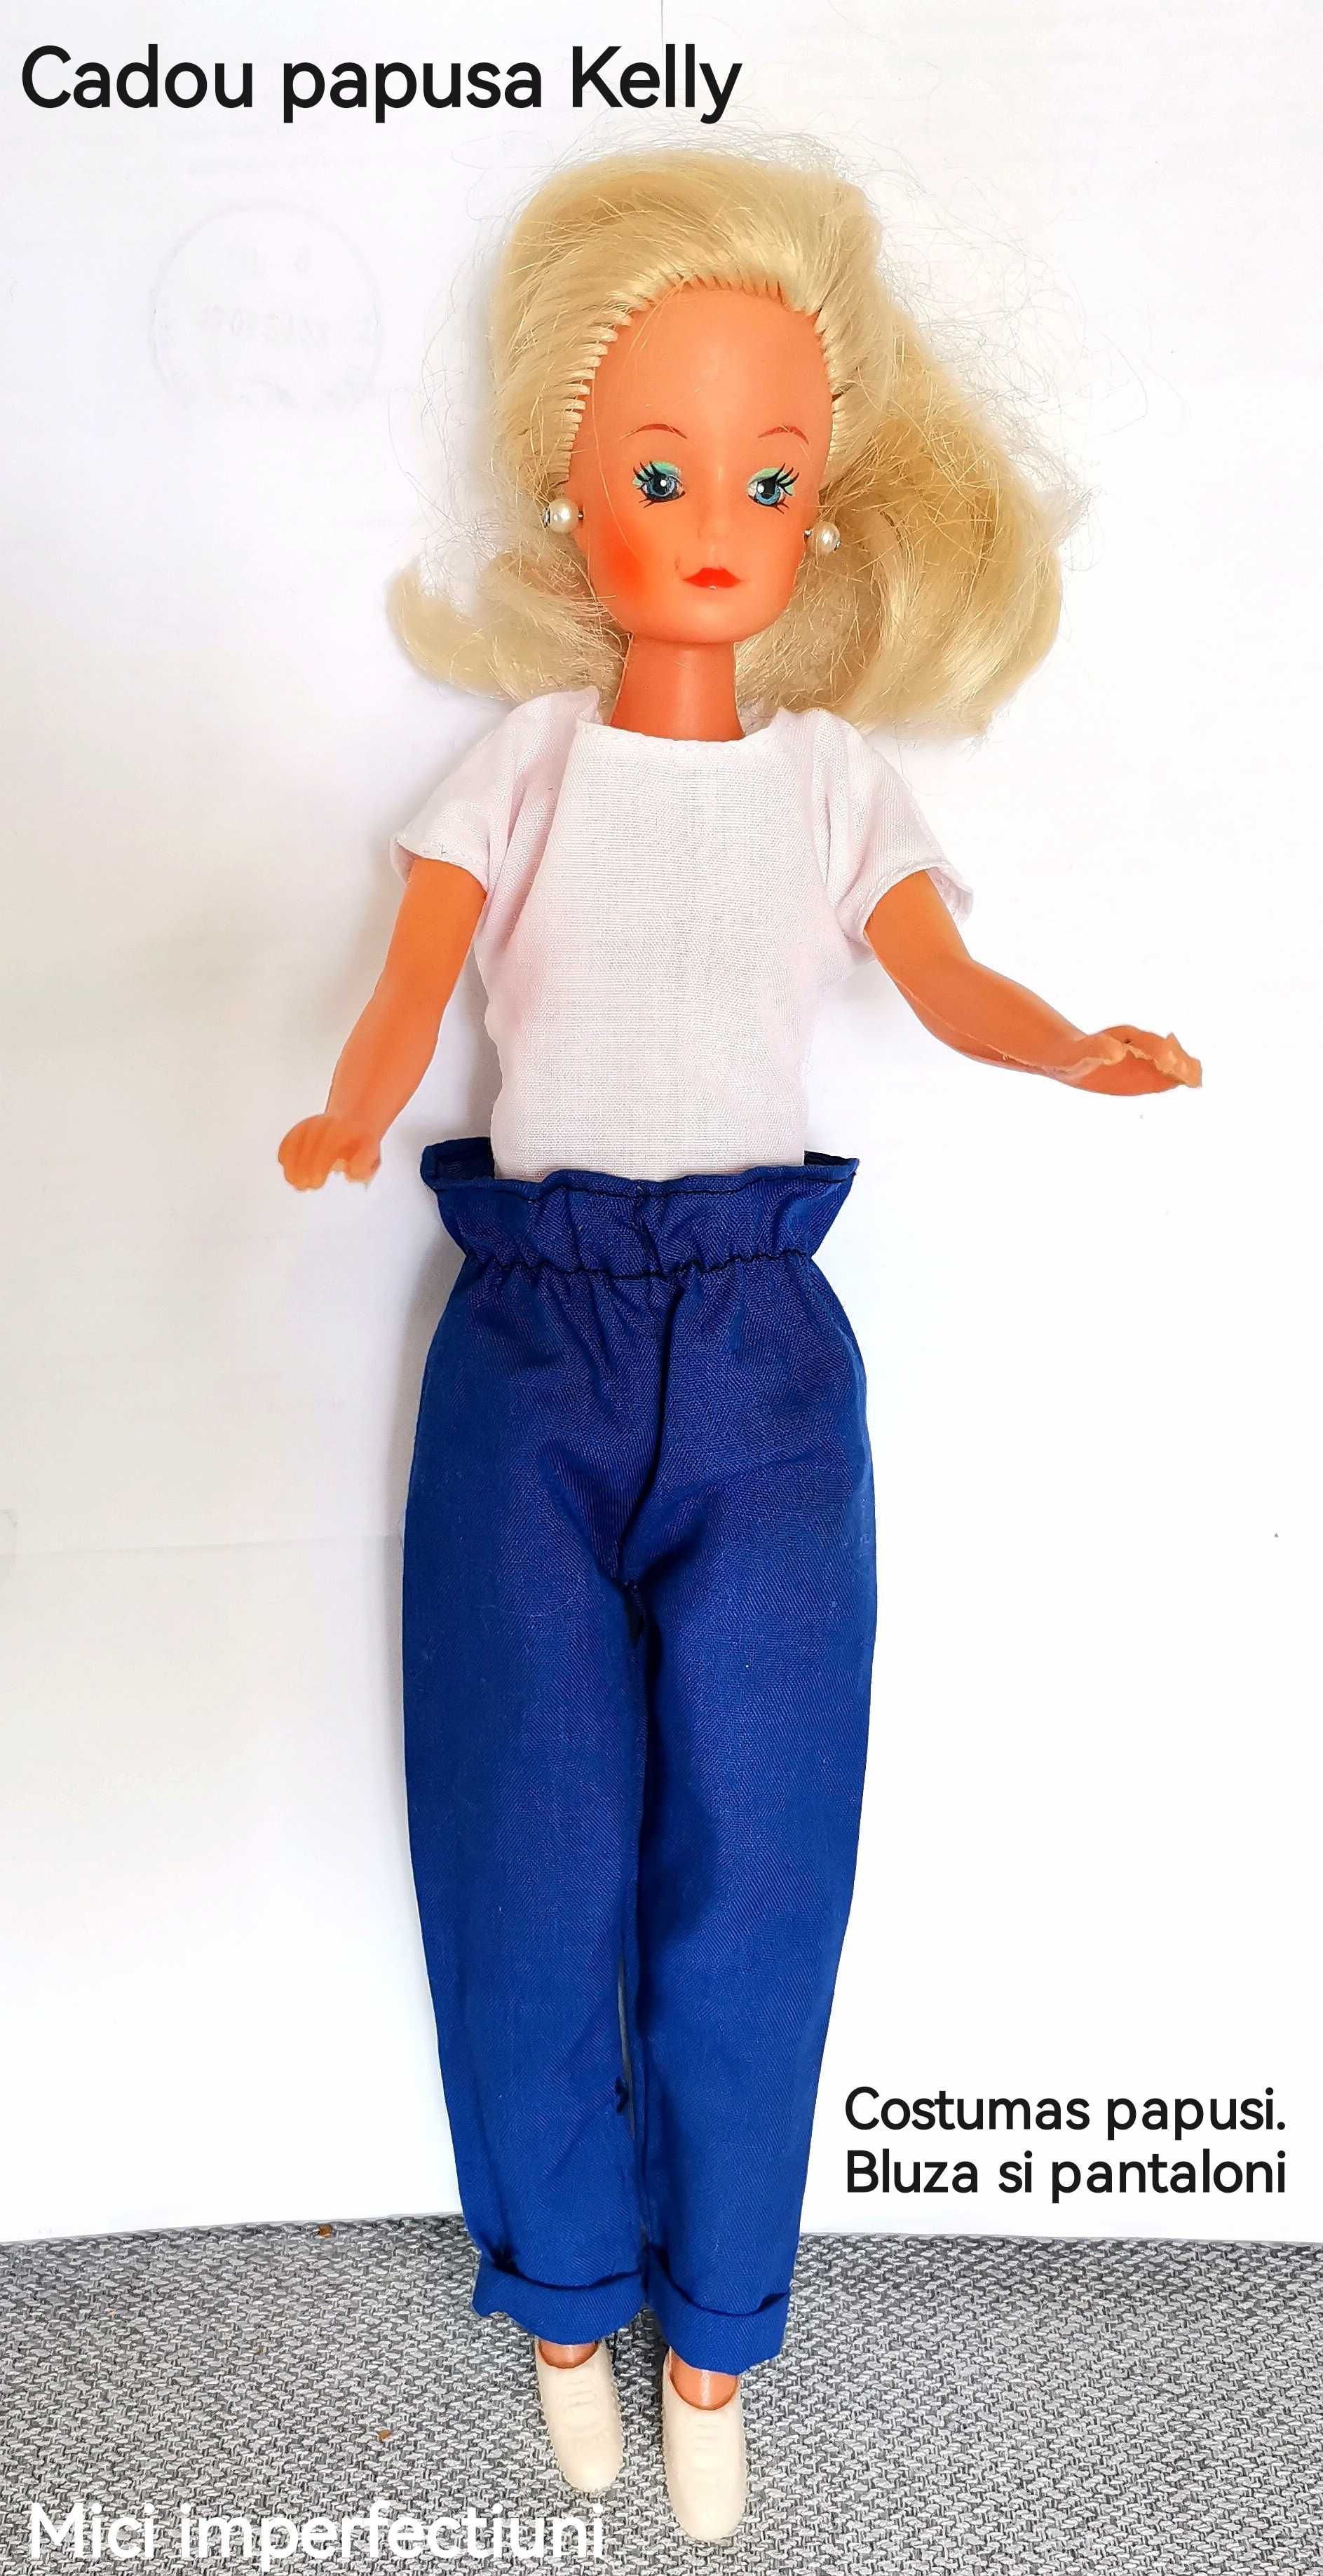 Rochiite costum haine papusi vintage imitatie Barbie bluza pantaloni